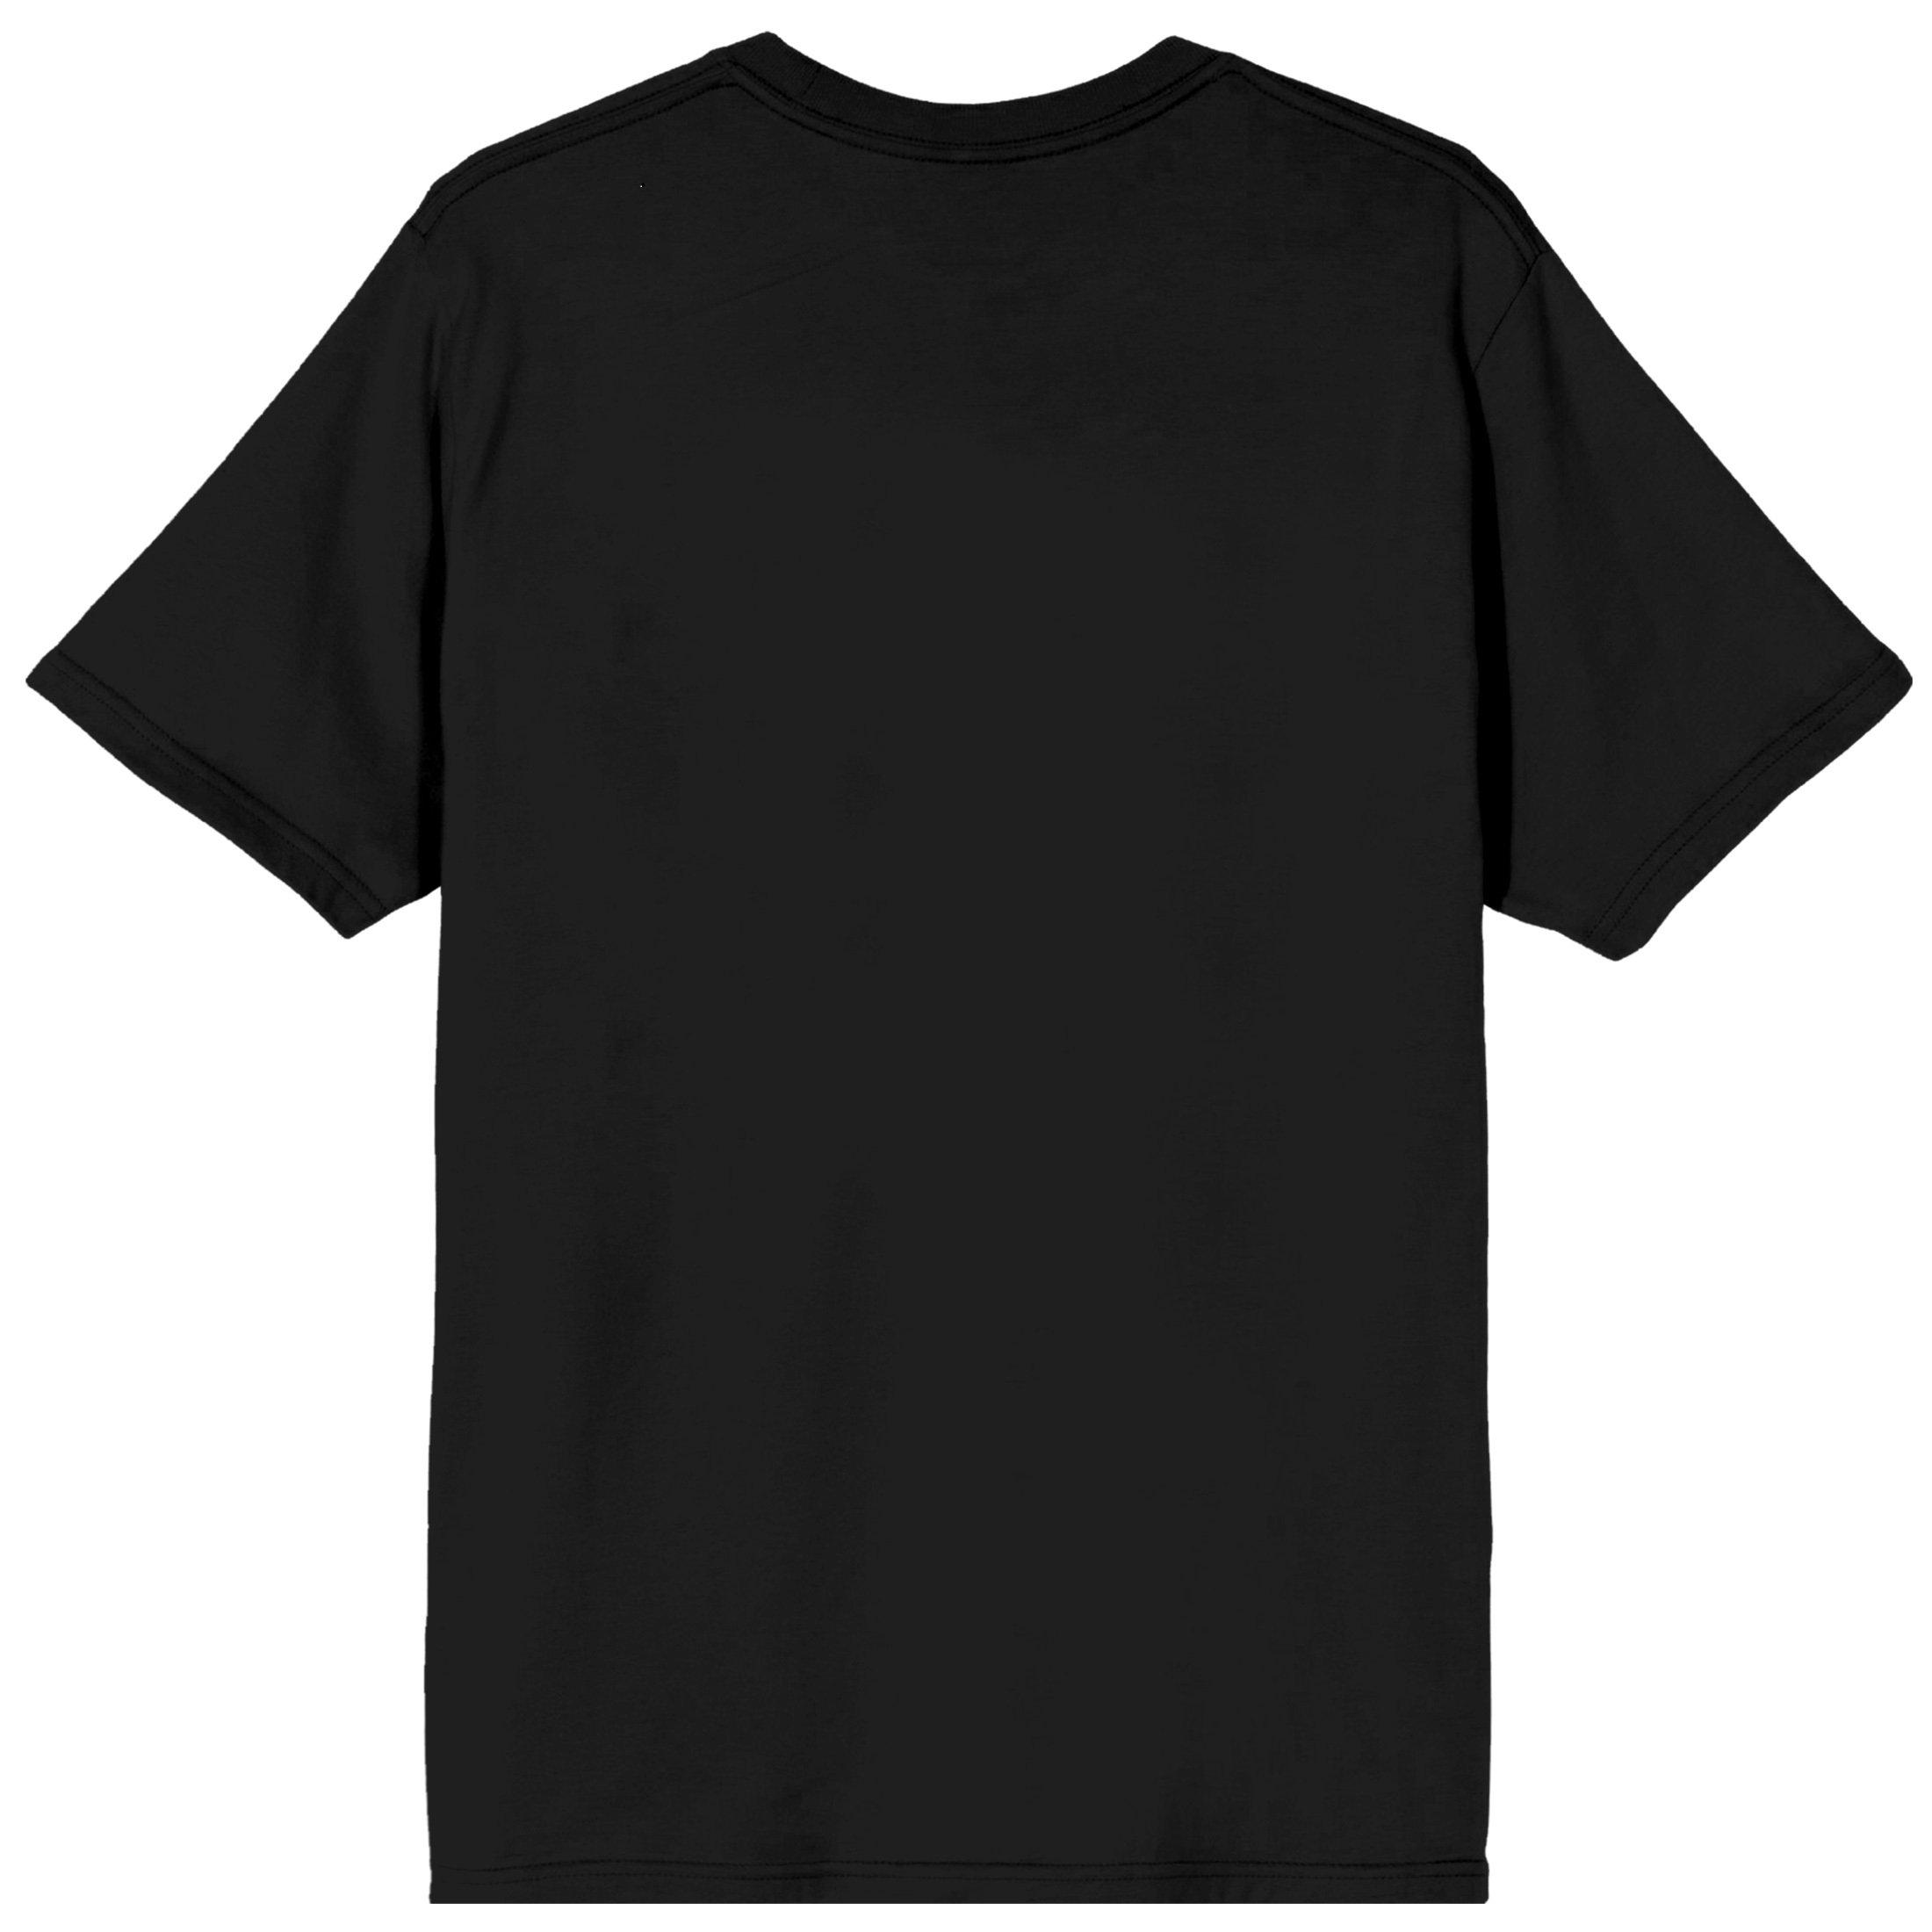 Dragon Ball Super Goku Character Panels Men's Black Short Sleeve T-Shirt